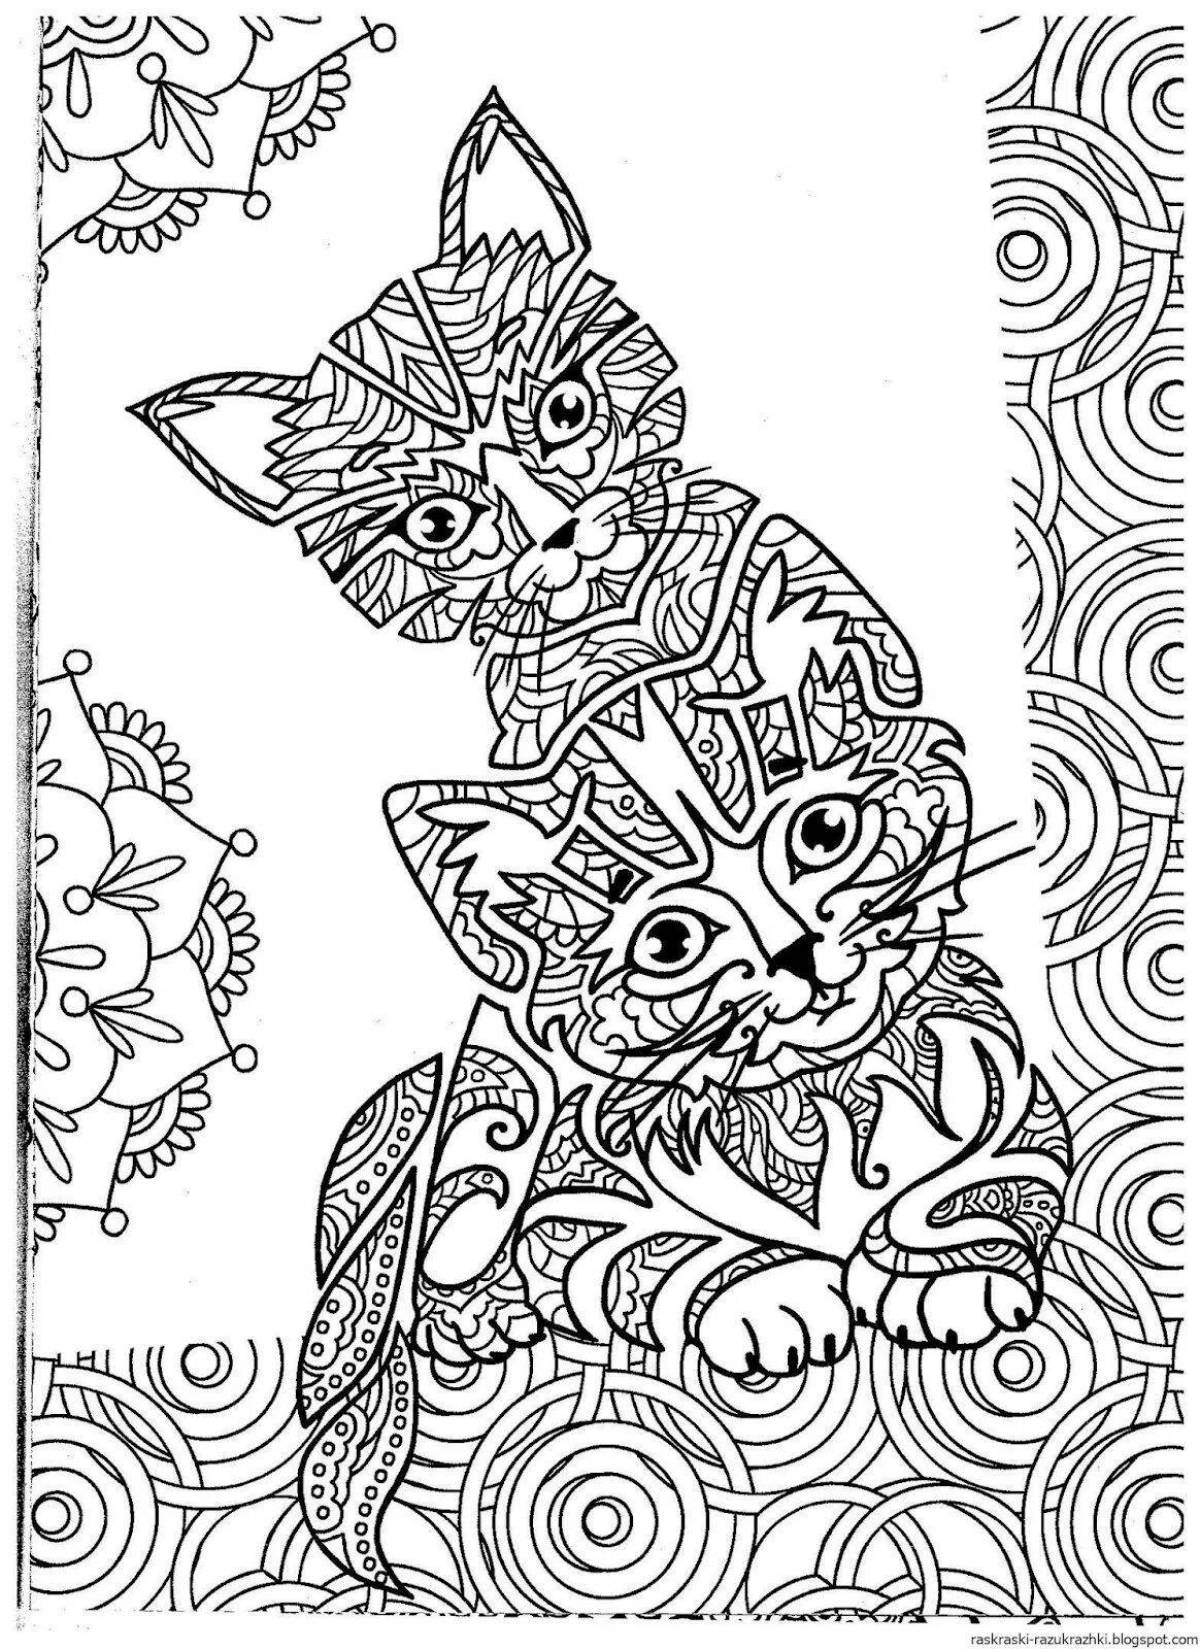 Coloring book beckoning magical cats